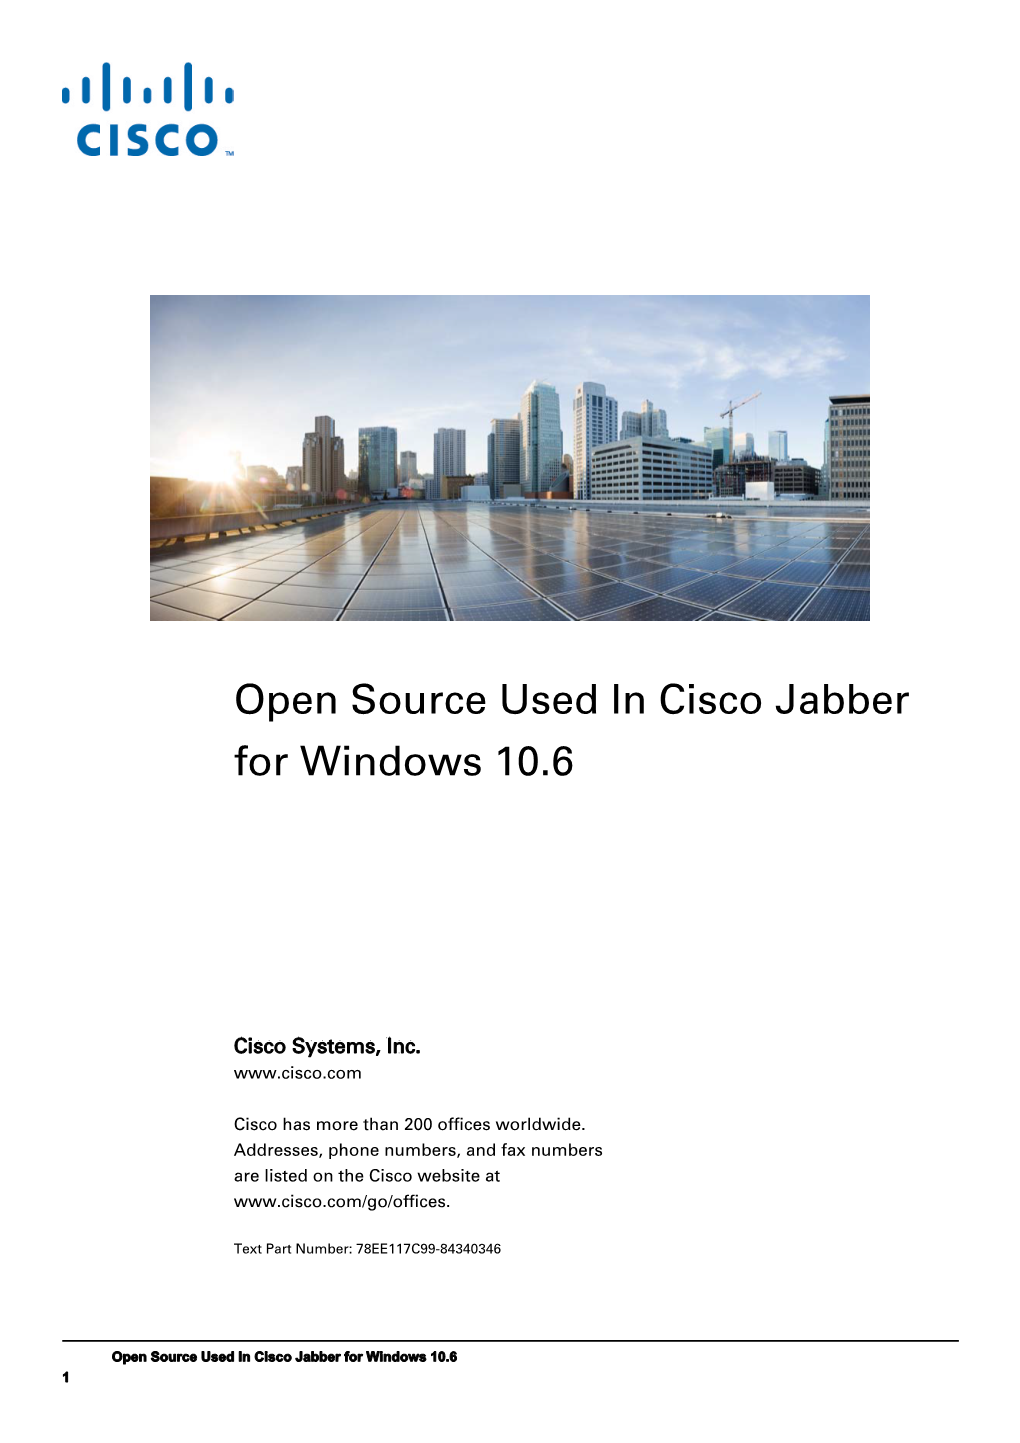 Cisco Jabber for Windows 10.6 Licensing Information